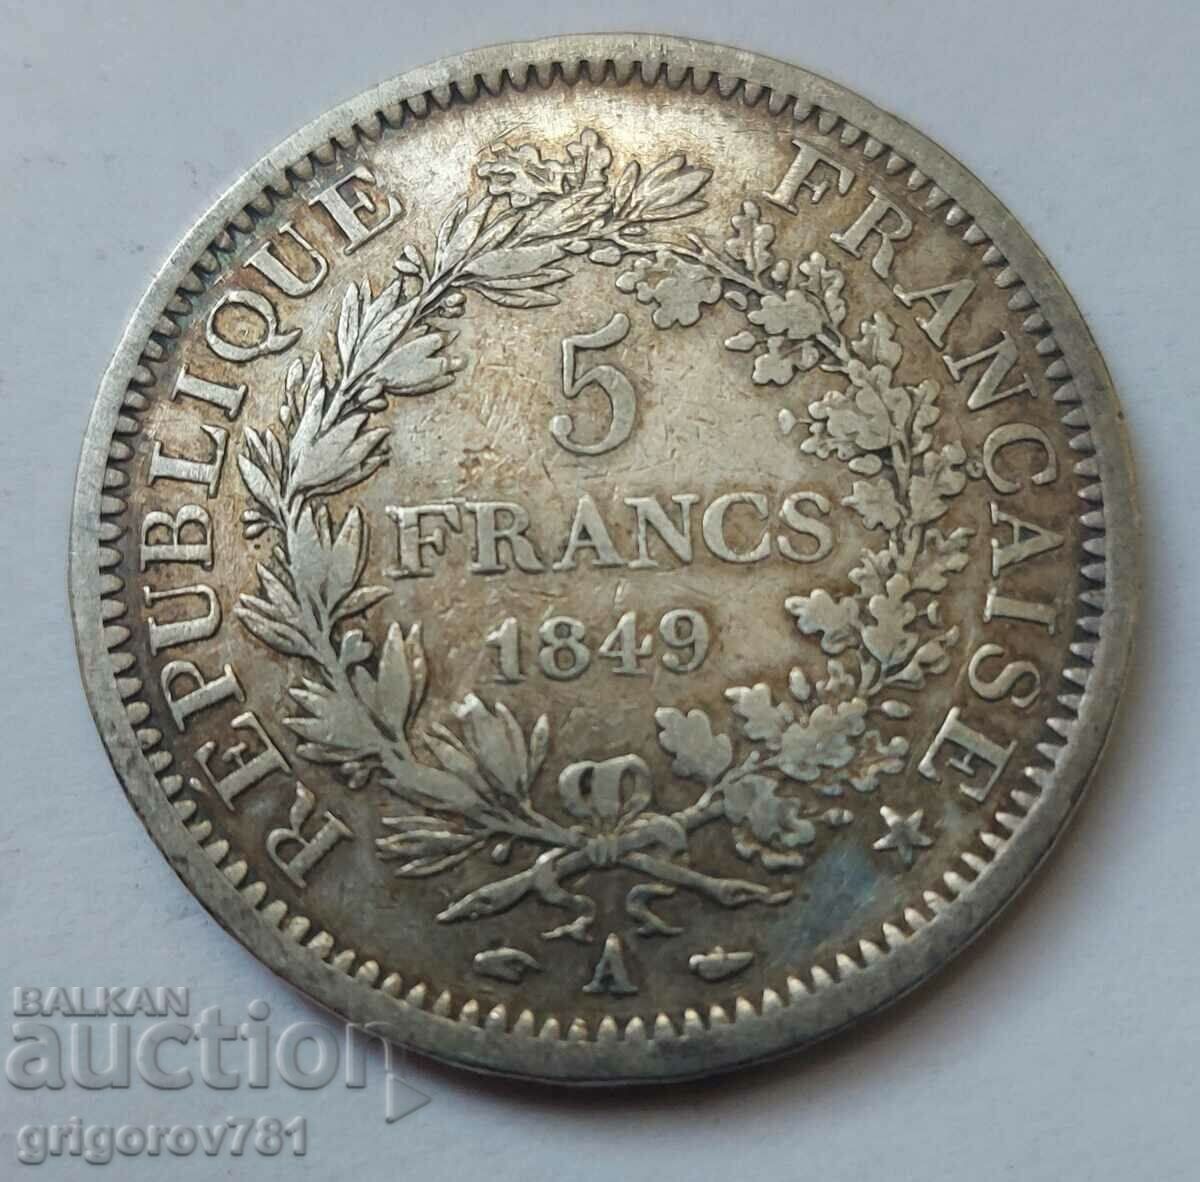 5 Francs Silver France 1849 A Silver Coin #148